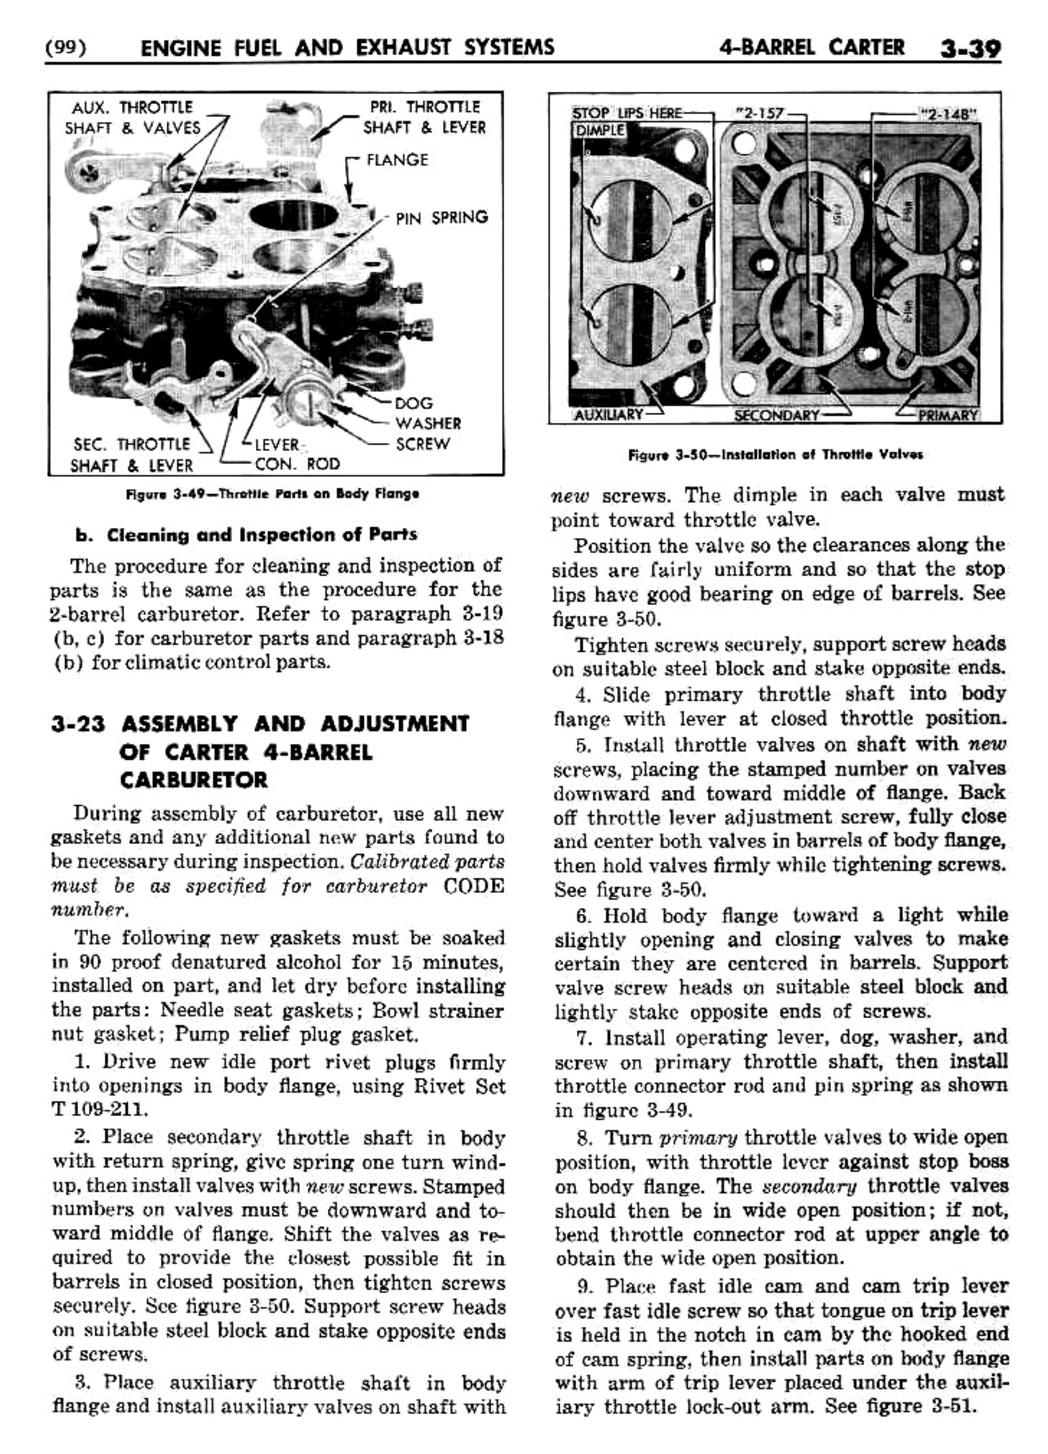 n_04 1955 Buick Shop Manual - Engine Fuel & Exhaust-039-039.jpg